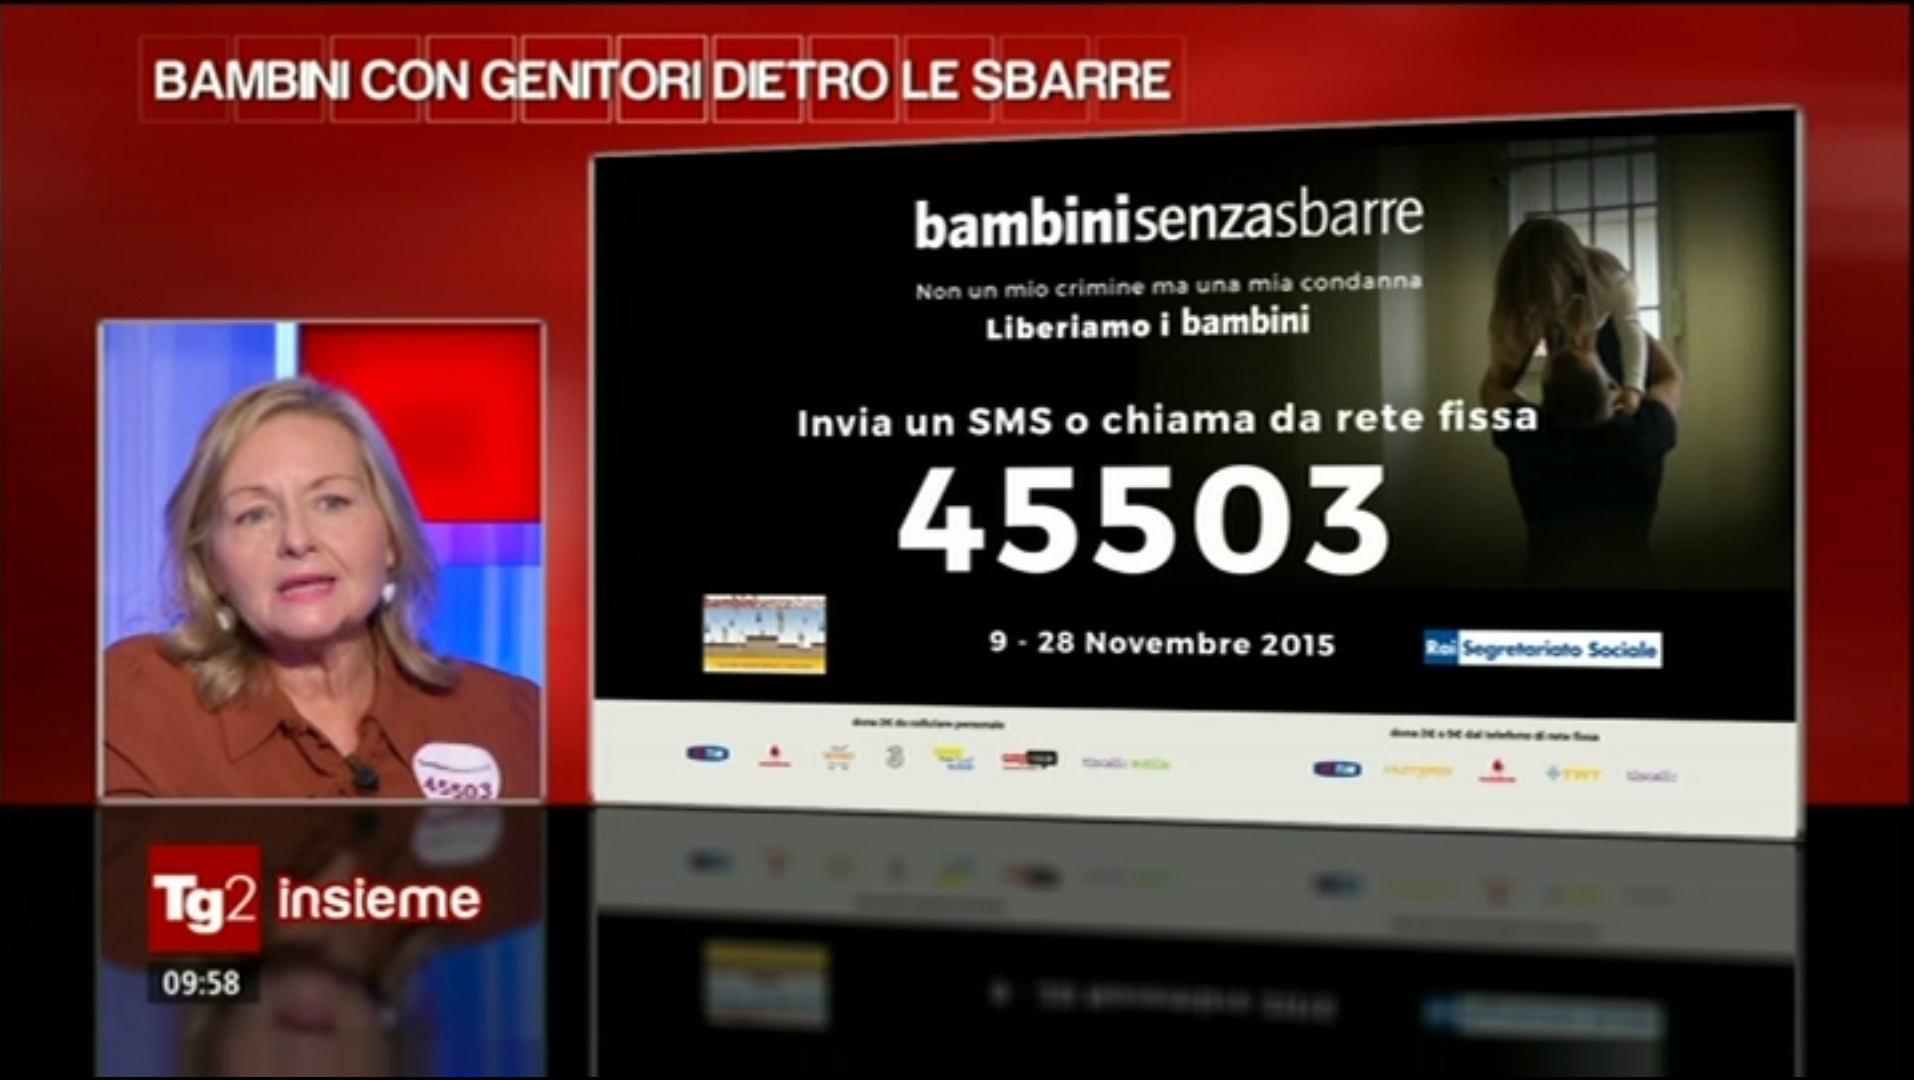 Bambinisenzasbarre in TV -2015